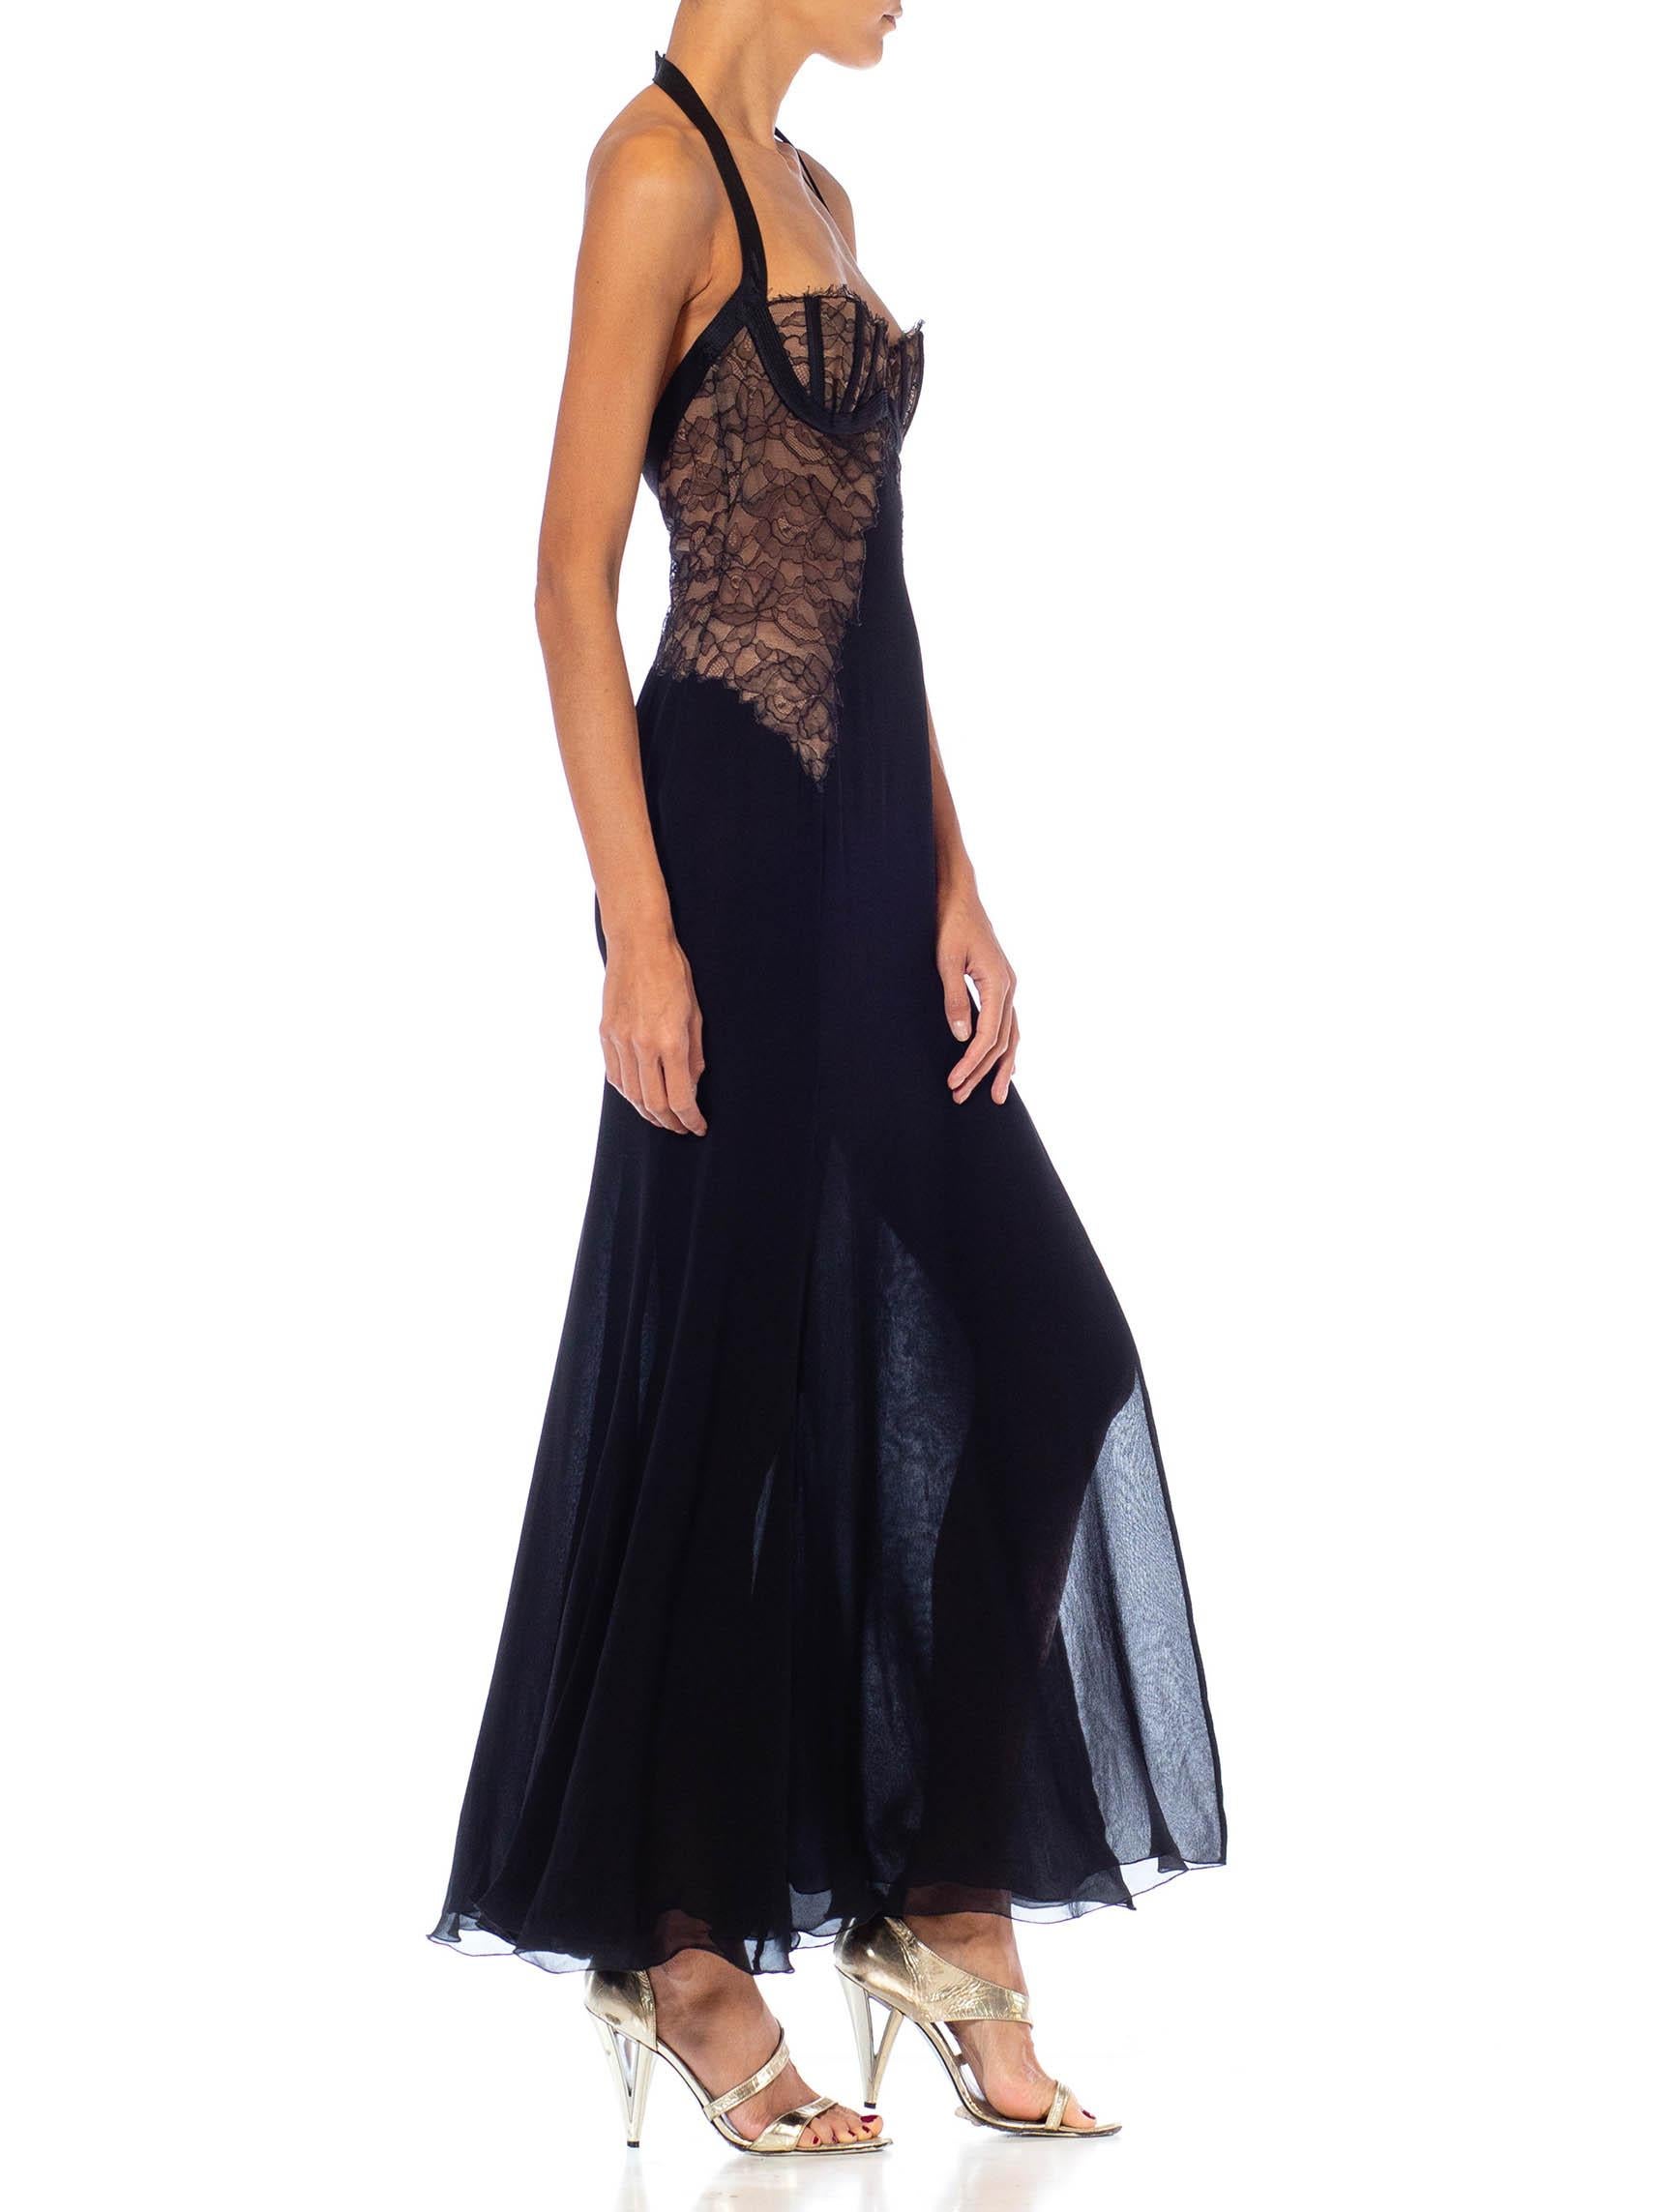 gianni versace black lace dress